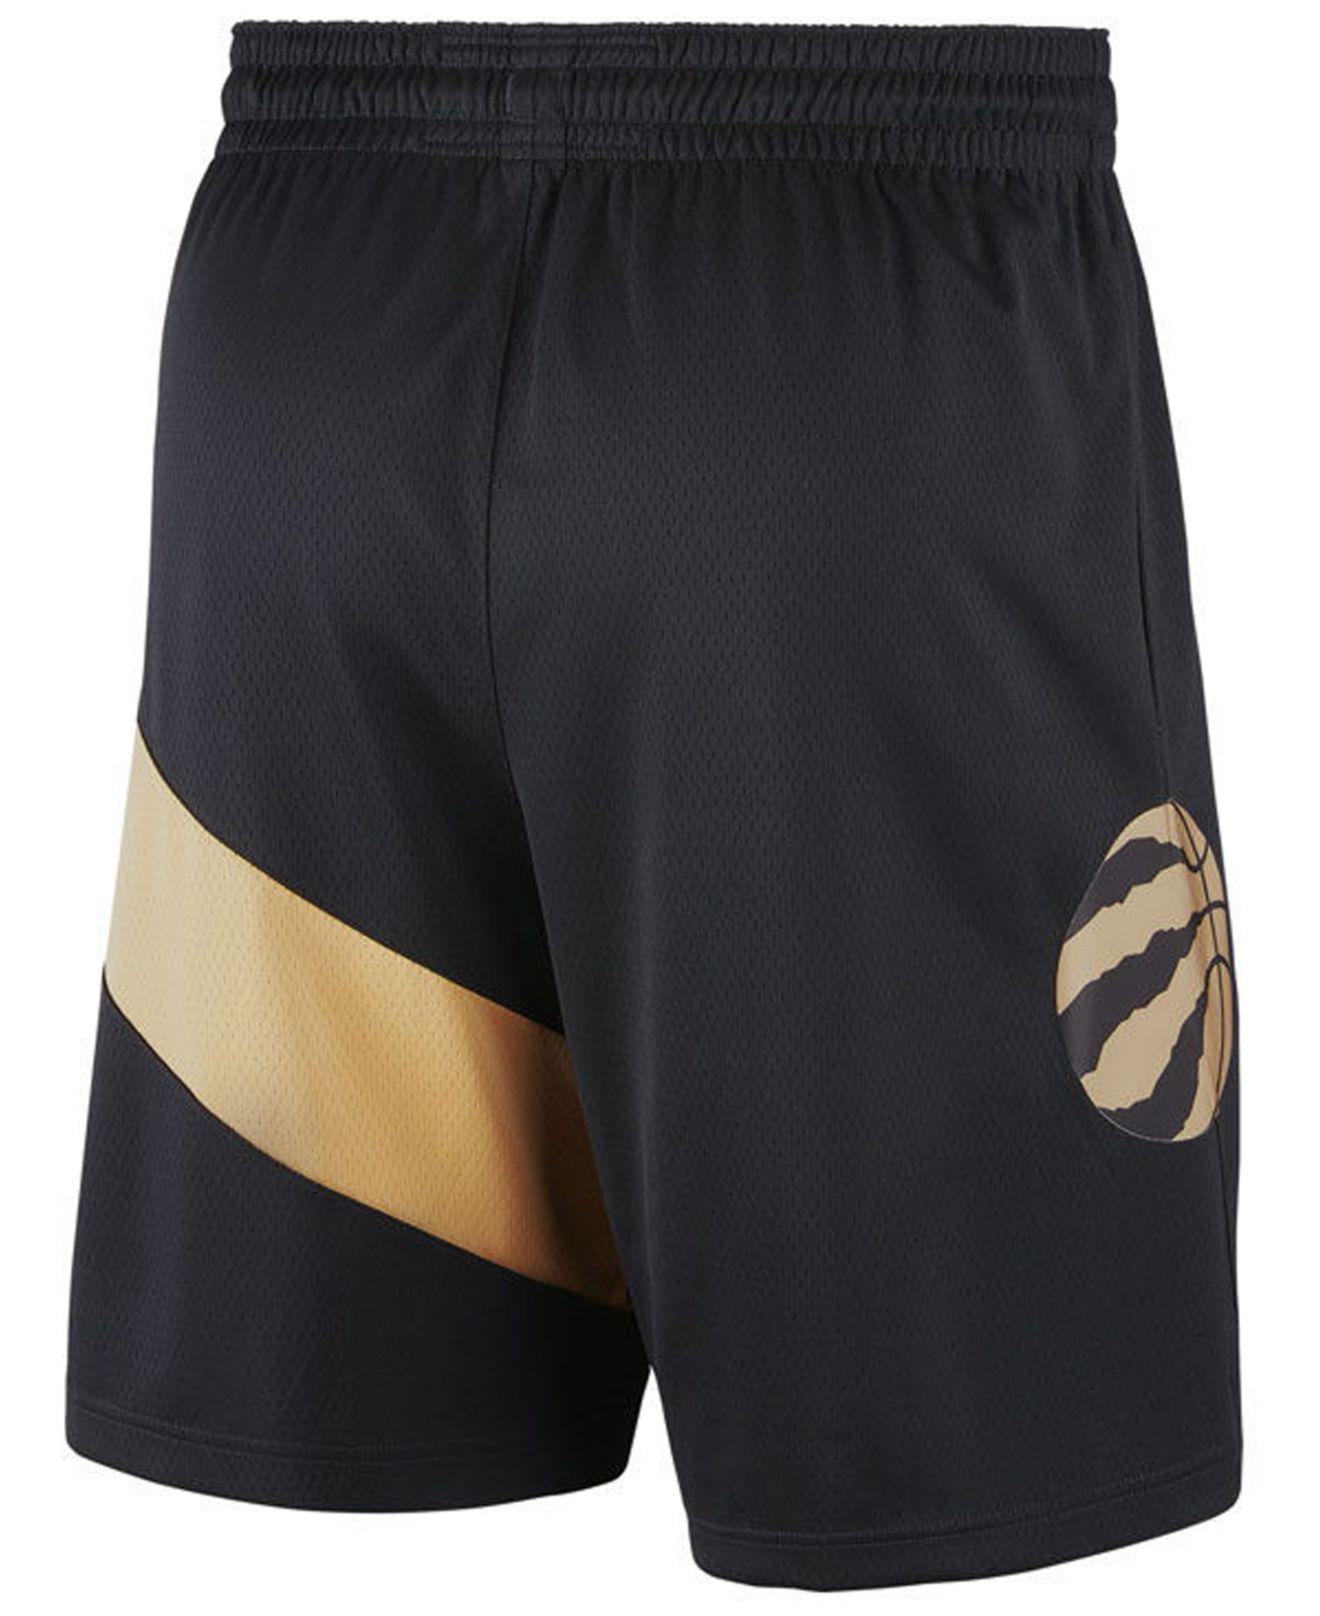 Nike Synthetic Toronto Raptors City Swingman Shorts in Black/Gold (Black)  for Men - Lyst